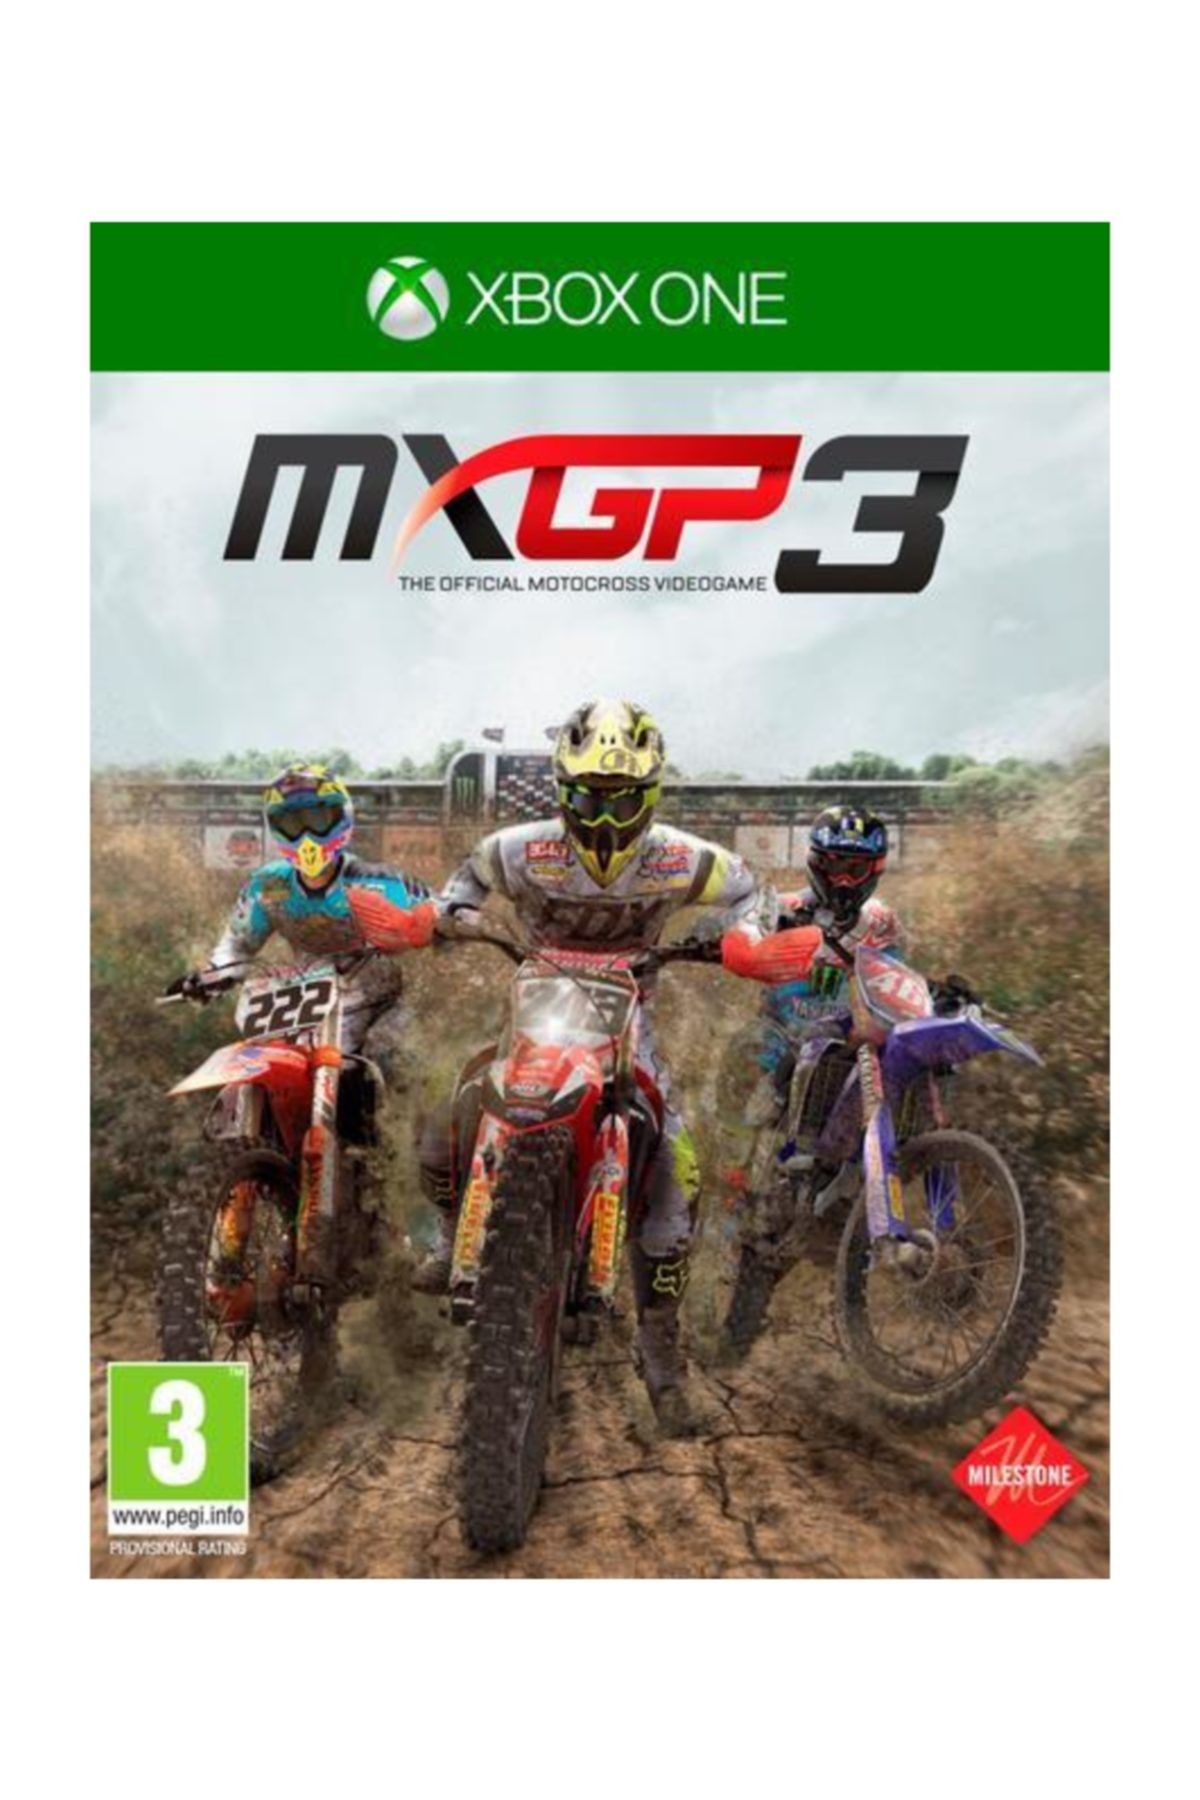 Milestone Xbox One Mxgp 3